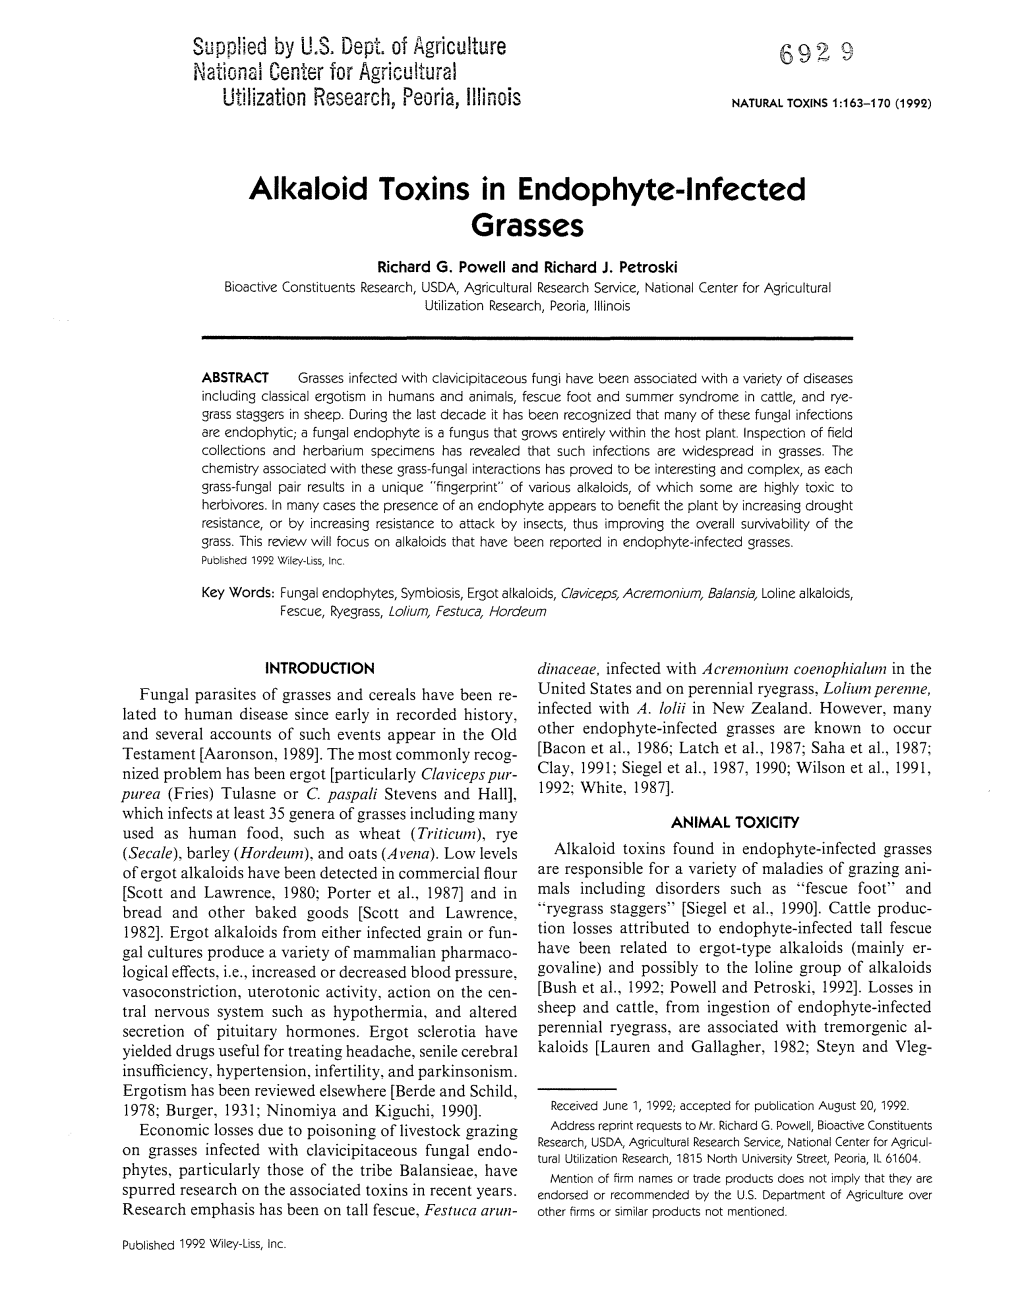 Alkaloid Toxins in Endophyte-Infected Grasses